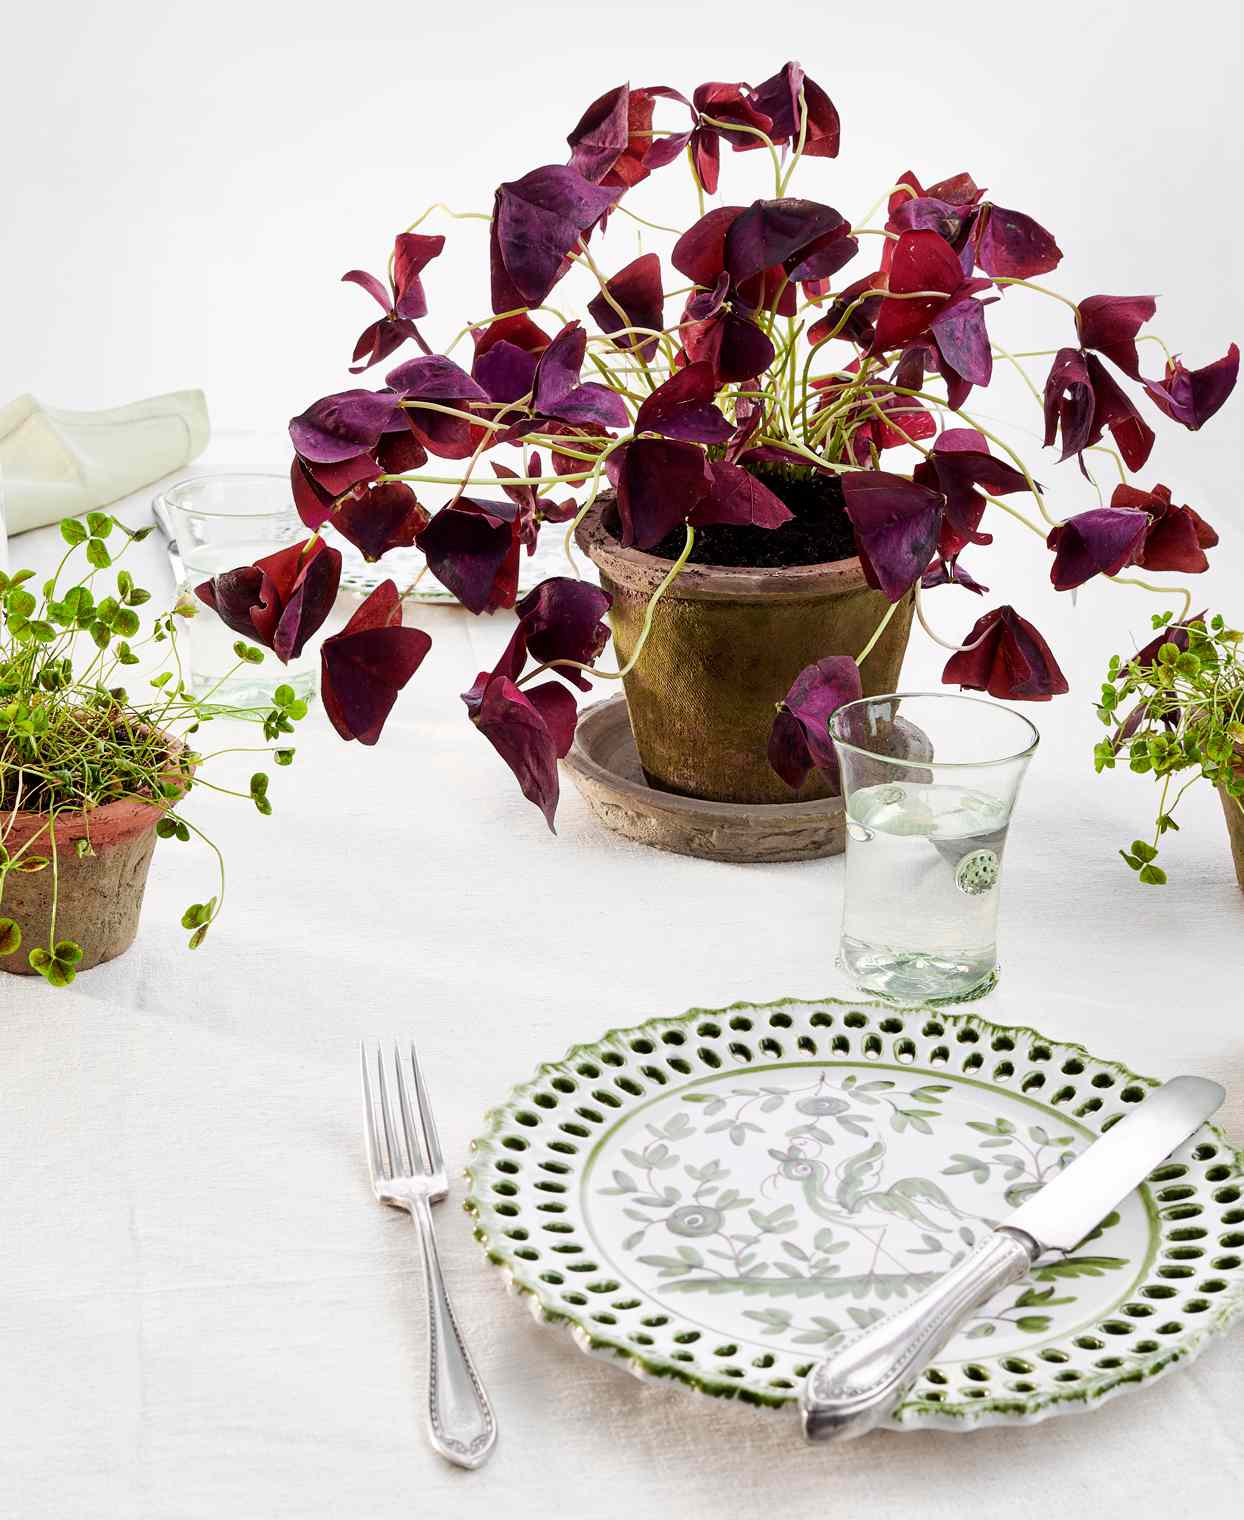 purple-leaf shamrock in pot on table setting